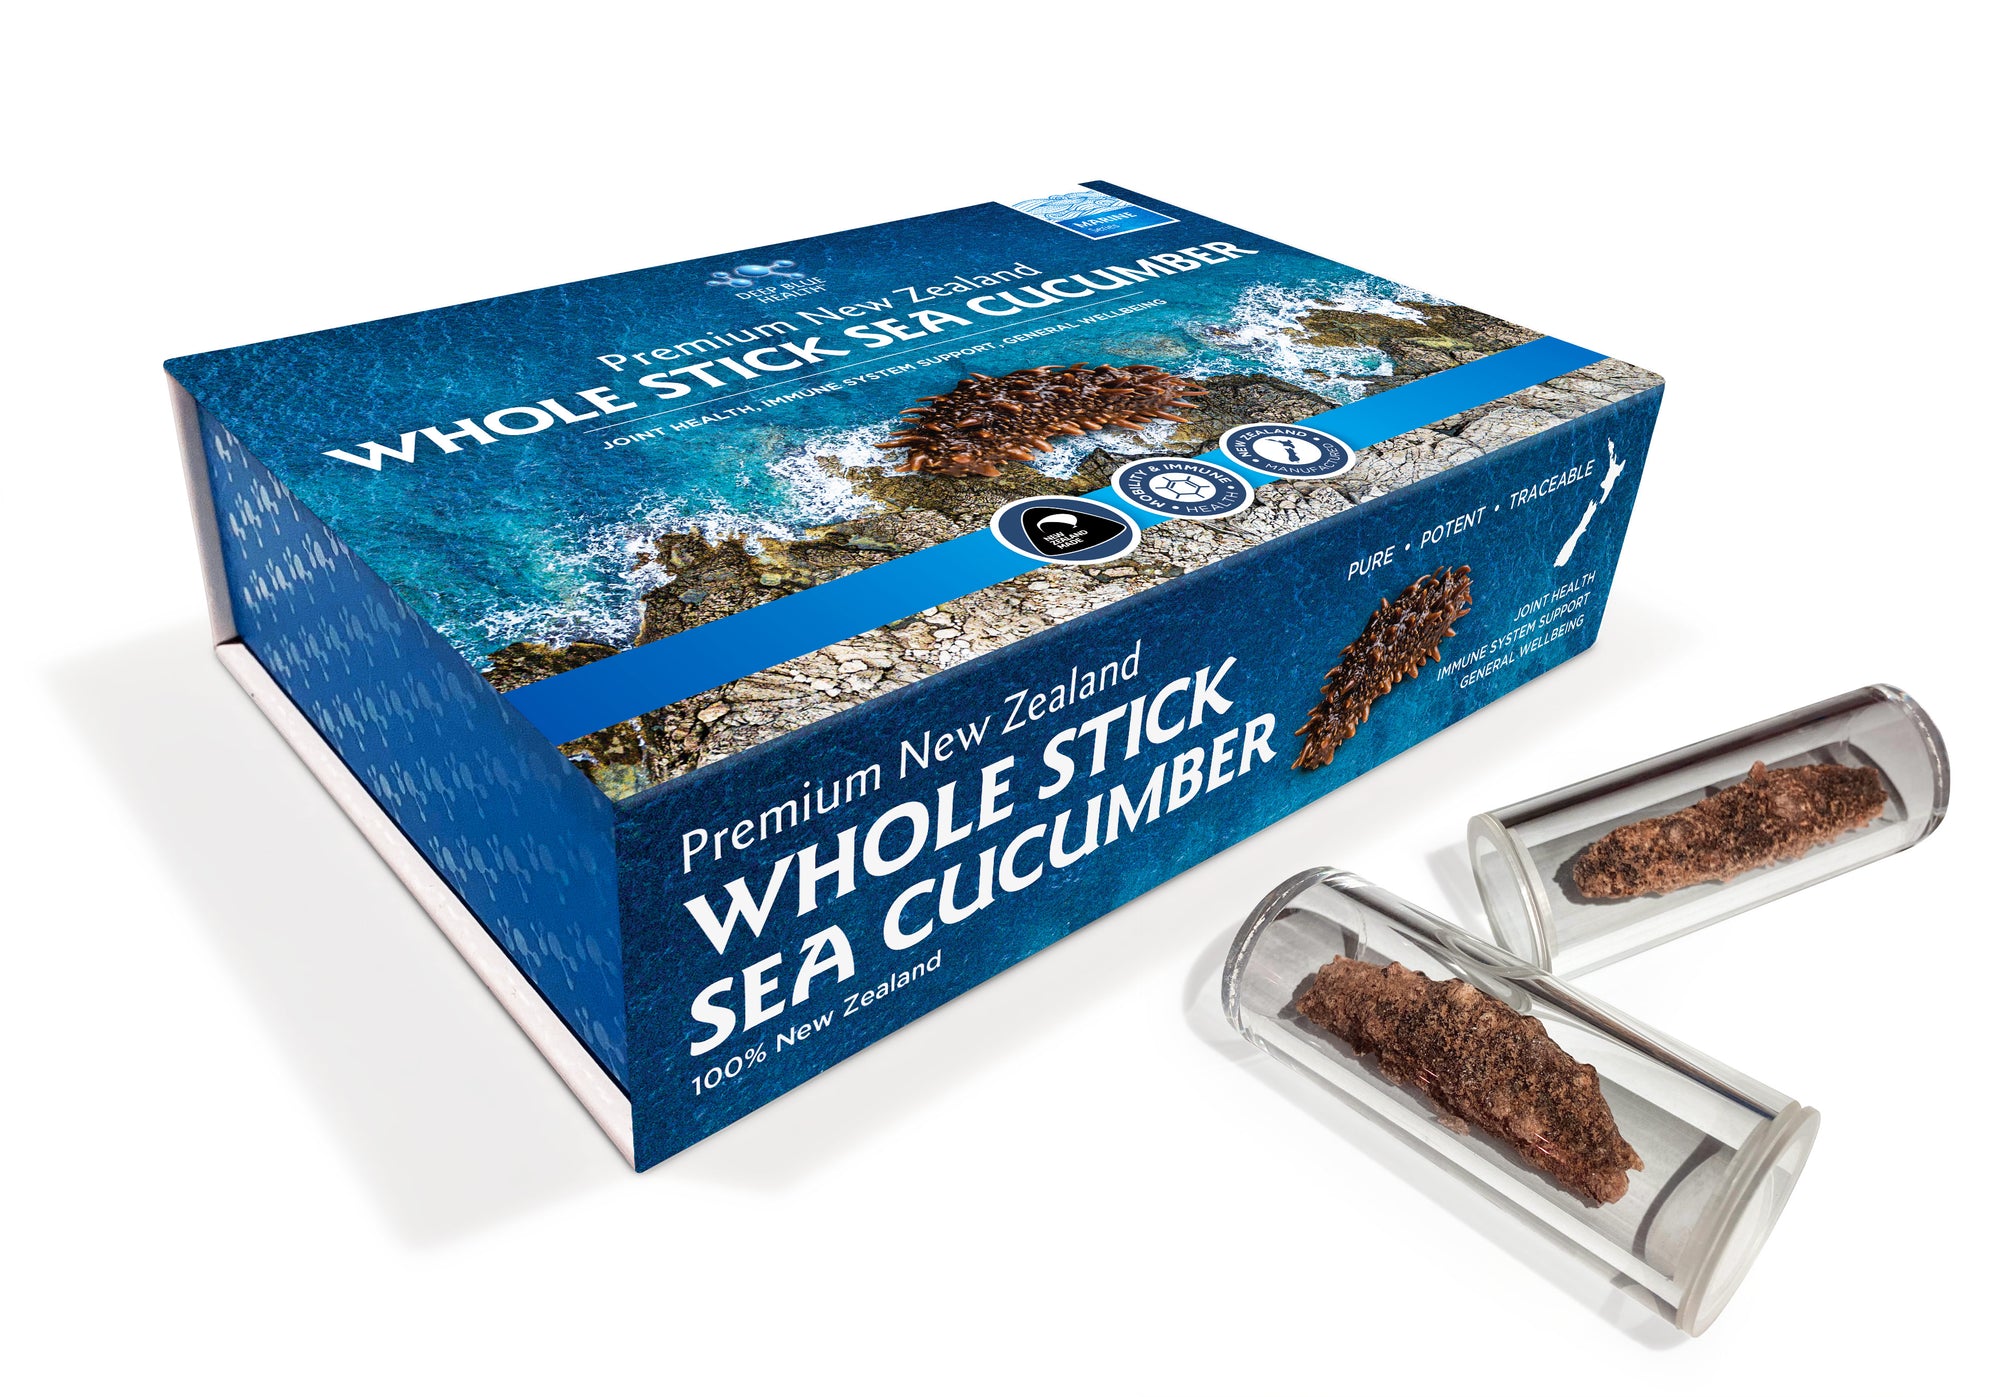 Premium New Zealand Whole Stick Sea Cucumber